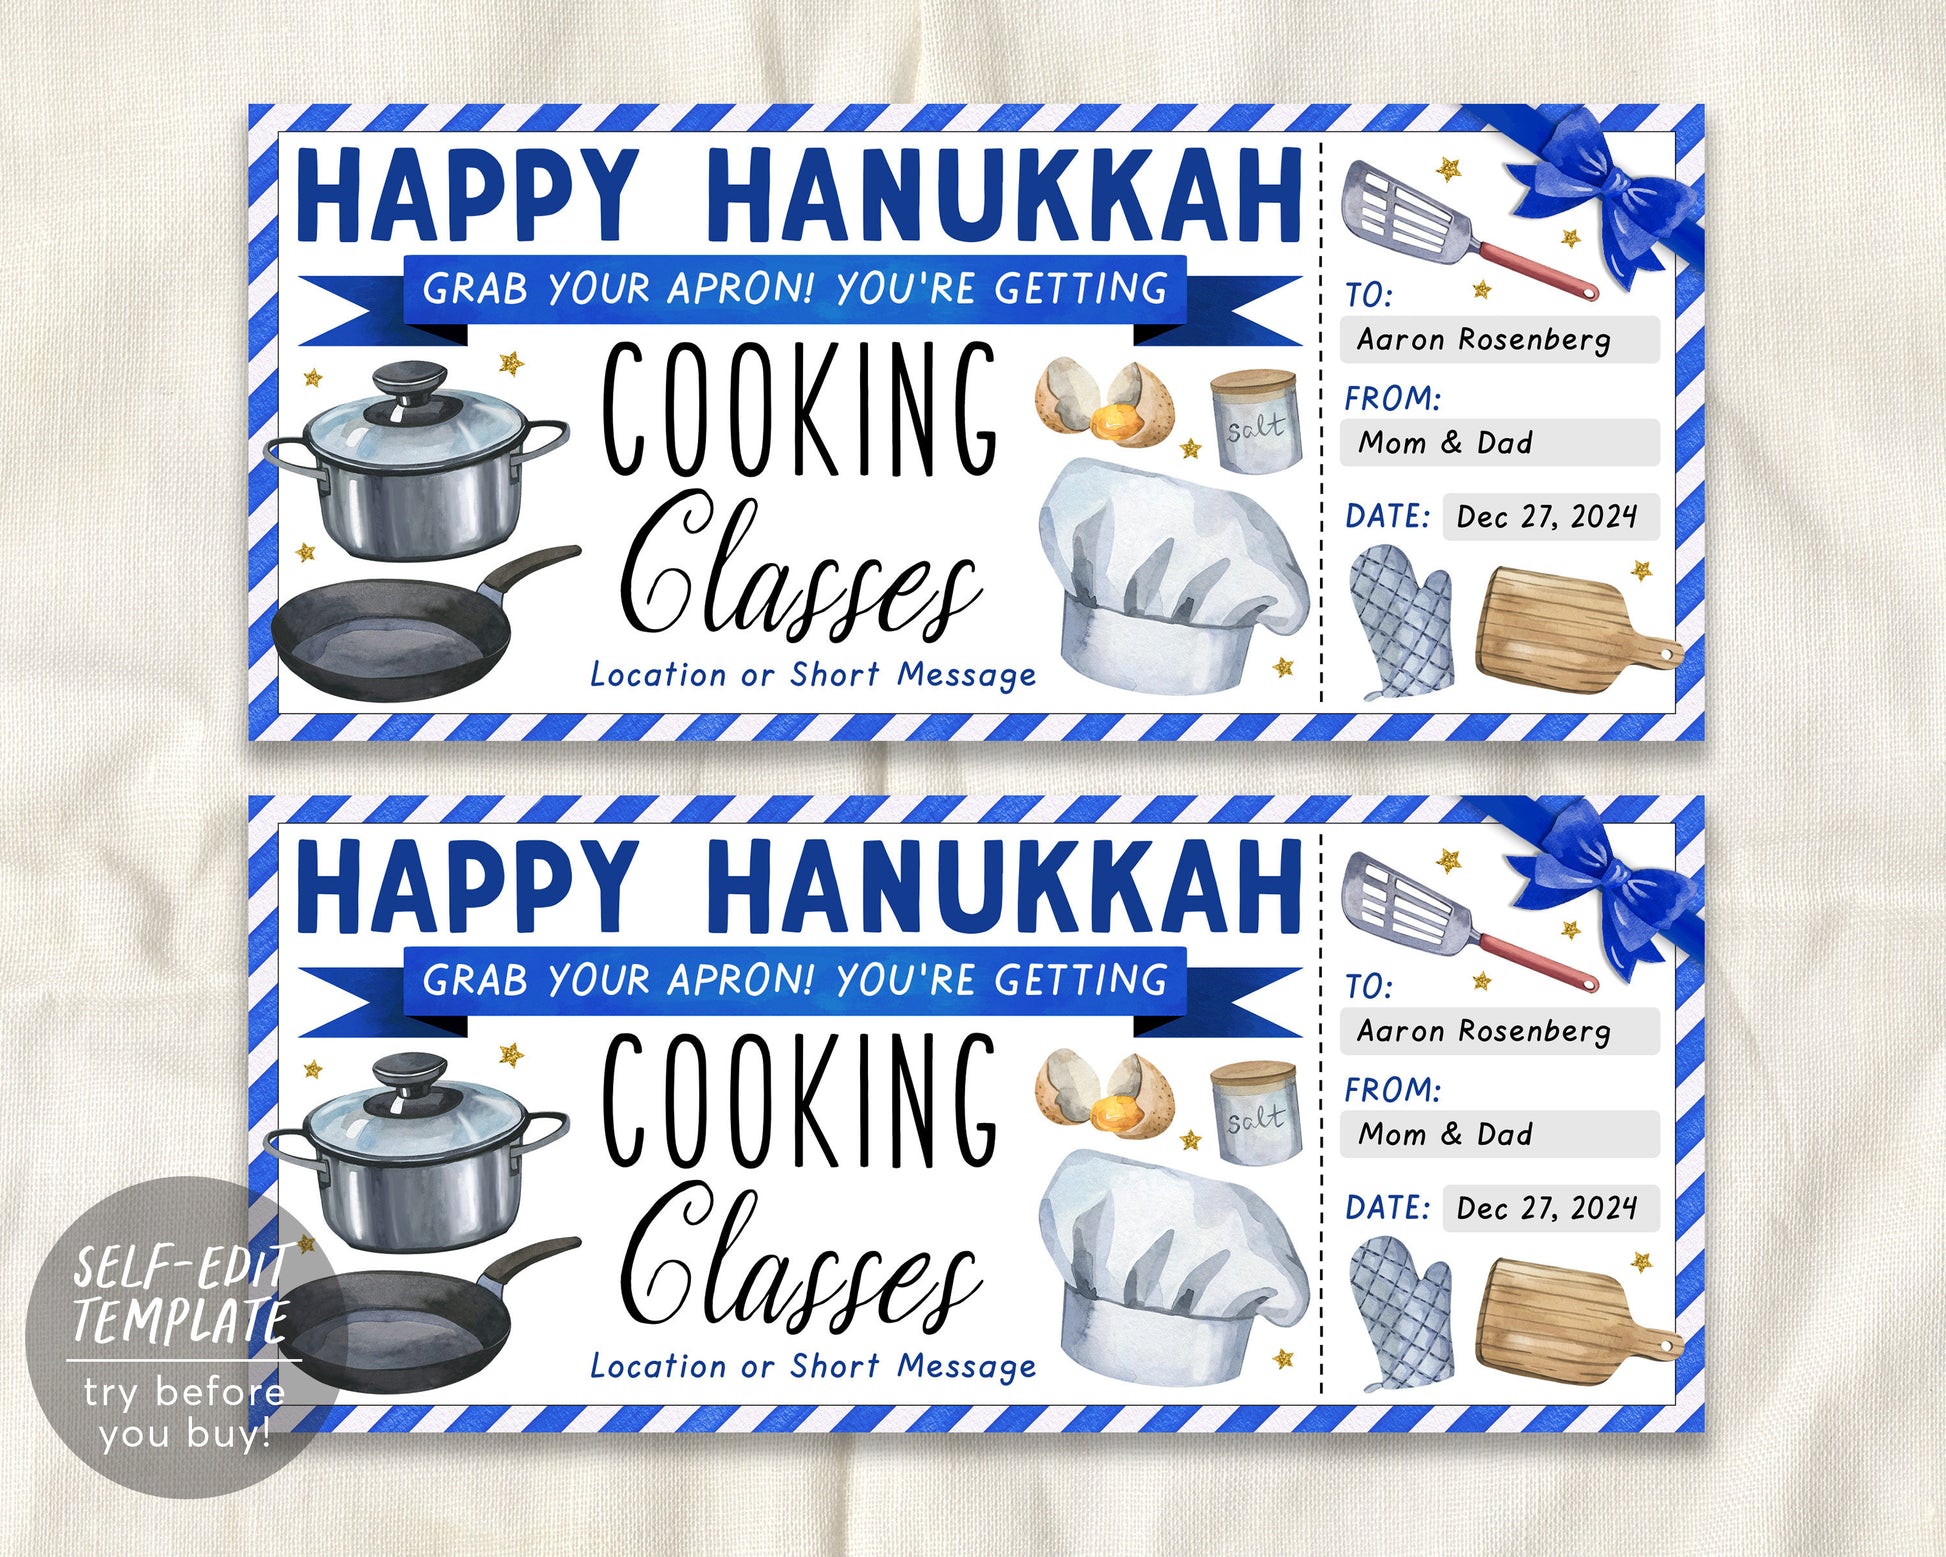 Happy Hanukkah Cooking Classes Gift Certificate Ticket Editable Template